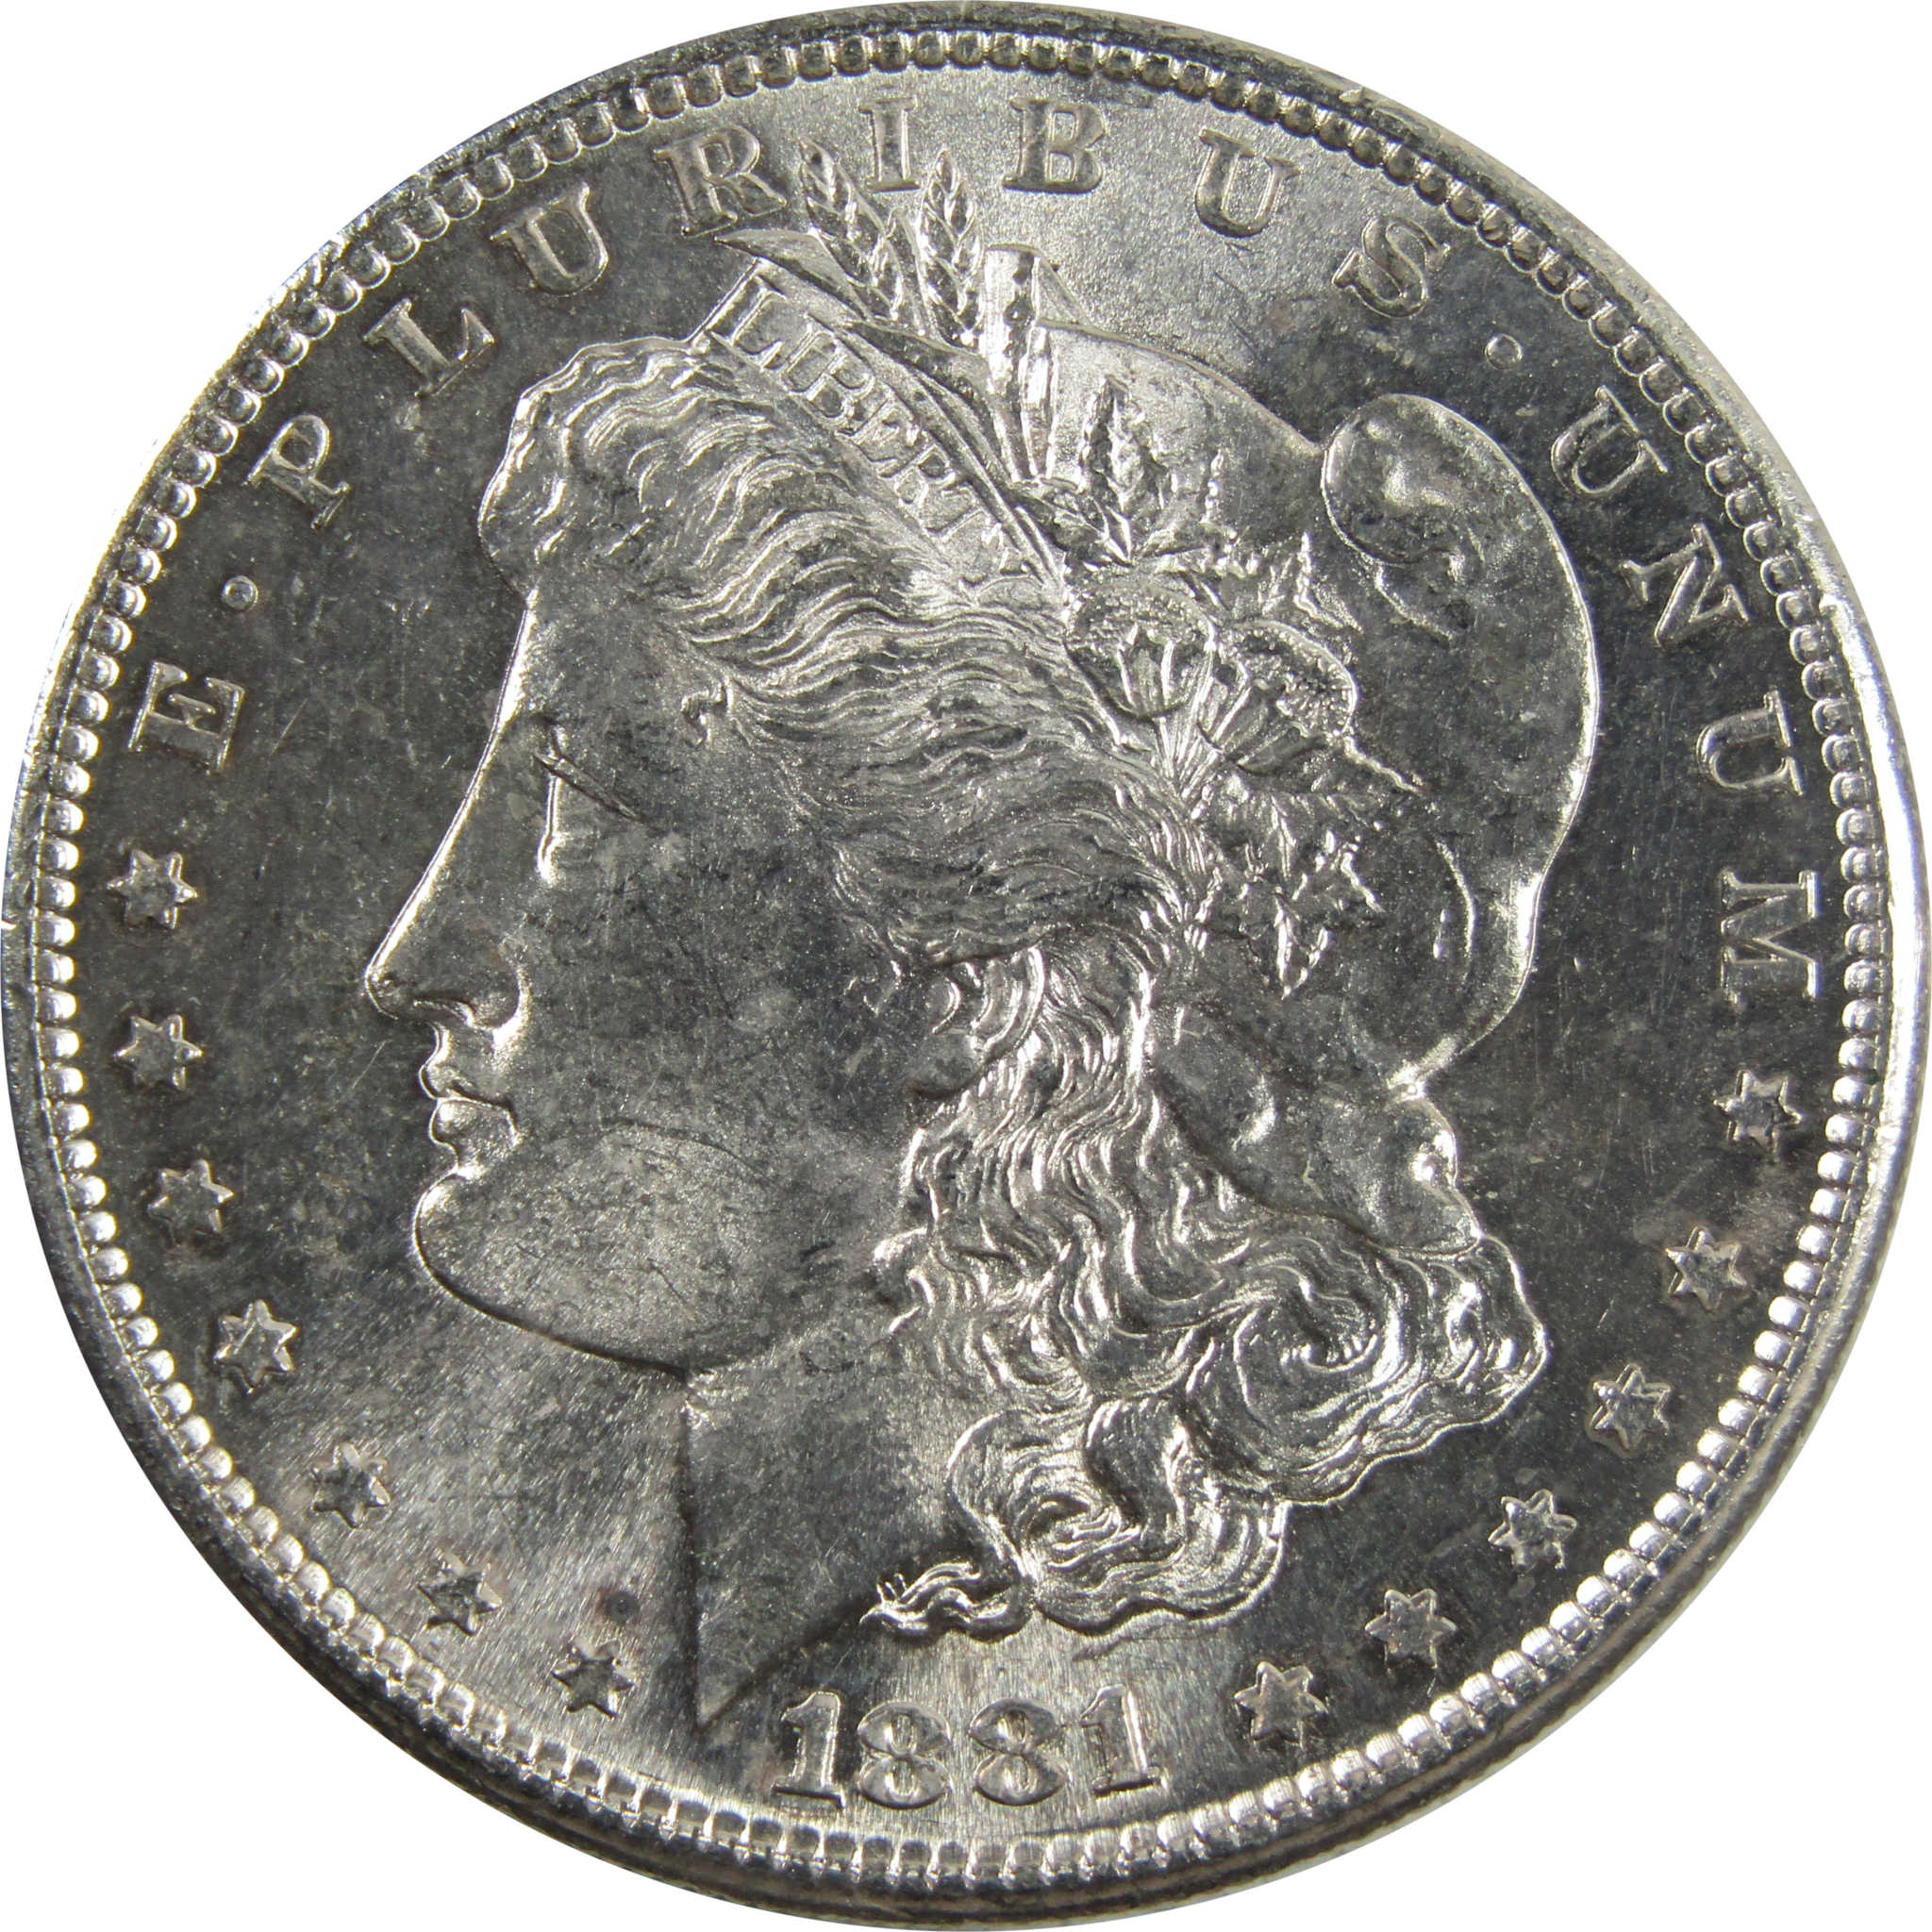 1881 S Morgan Dollar BU Uncirculated 90% Silver $1 Coin SKU:I5308 - Morgan coin - Morgan silver dollar - Morgan silver dollar for sale - Profile Coins &amp; Collectibles